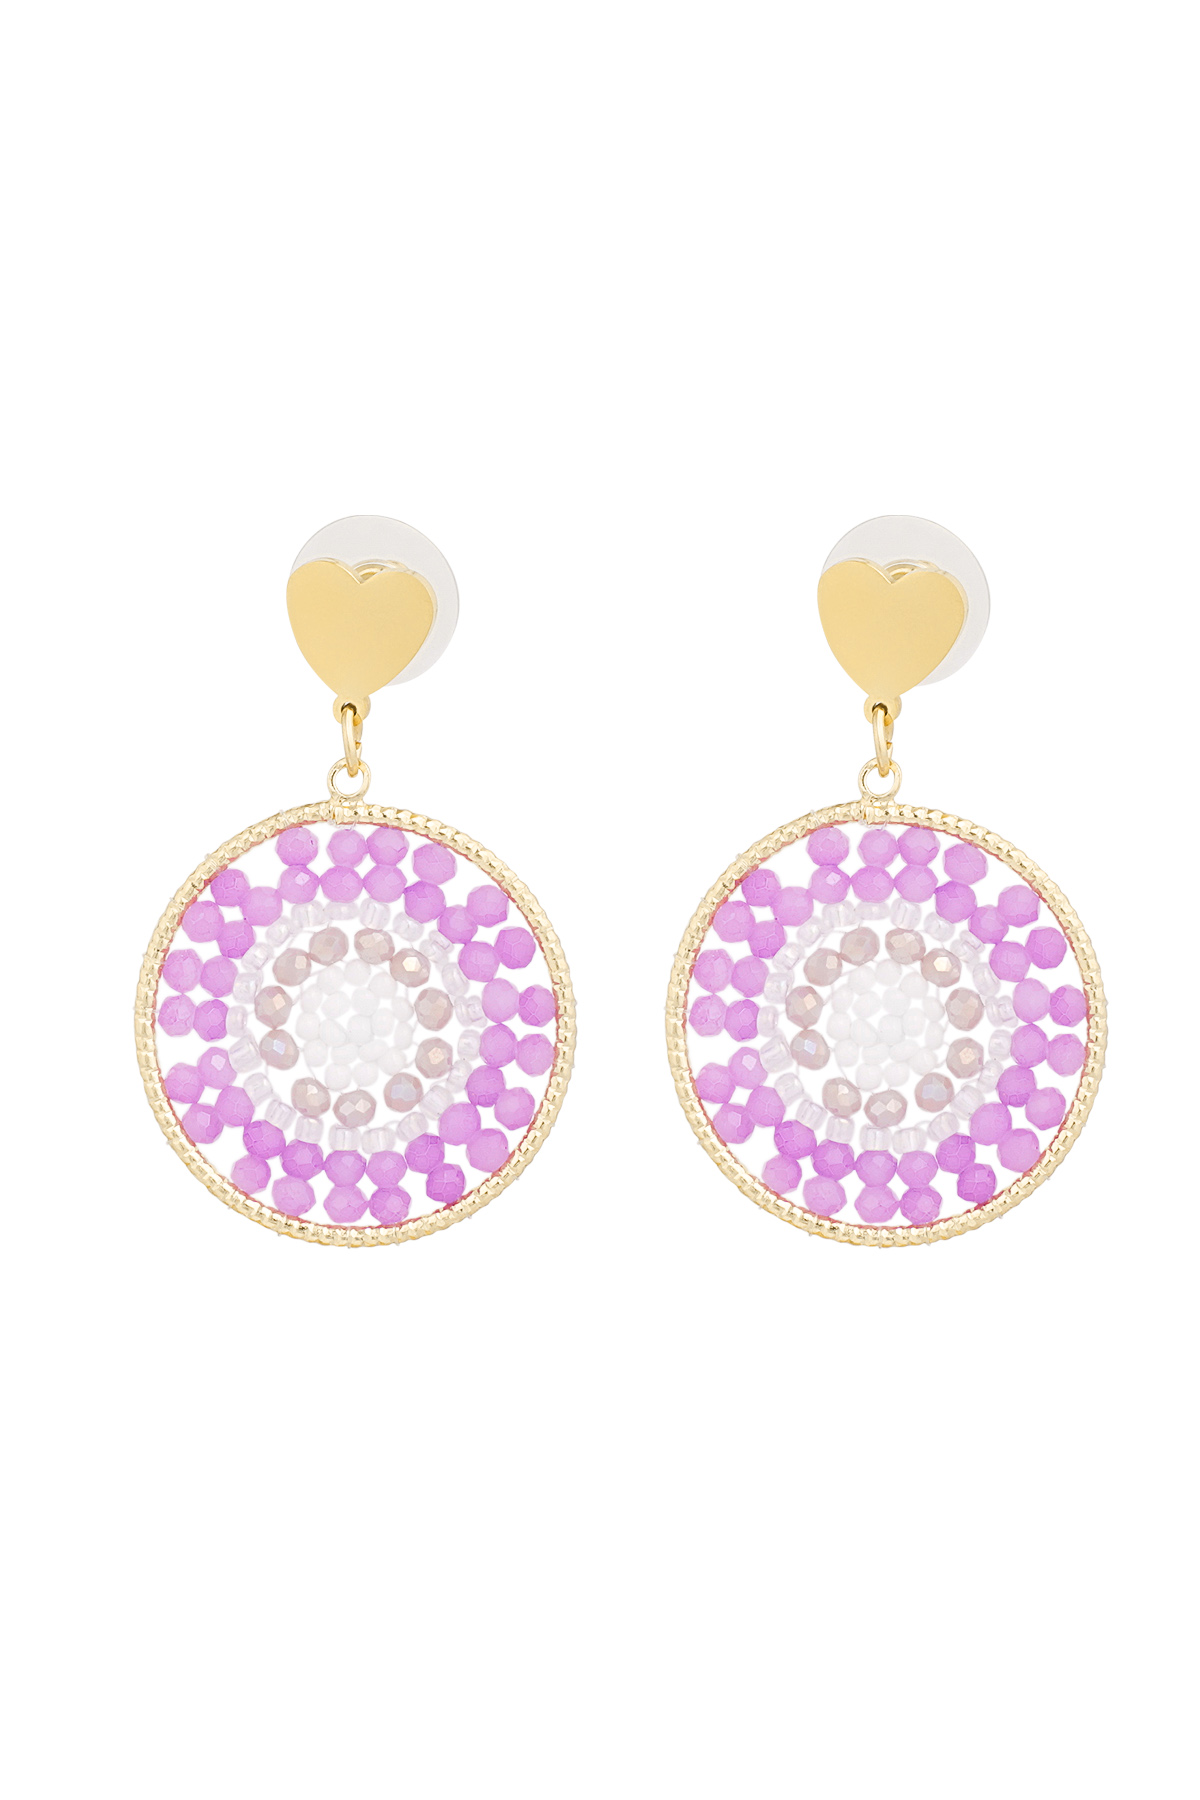 Mandala earrings with heart - purple 